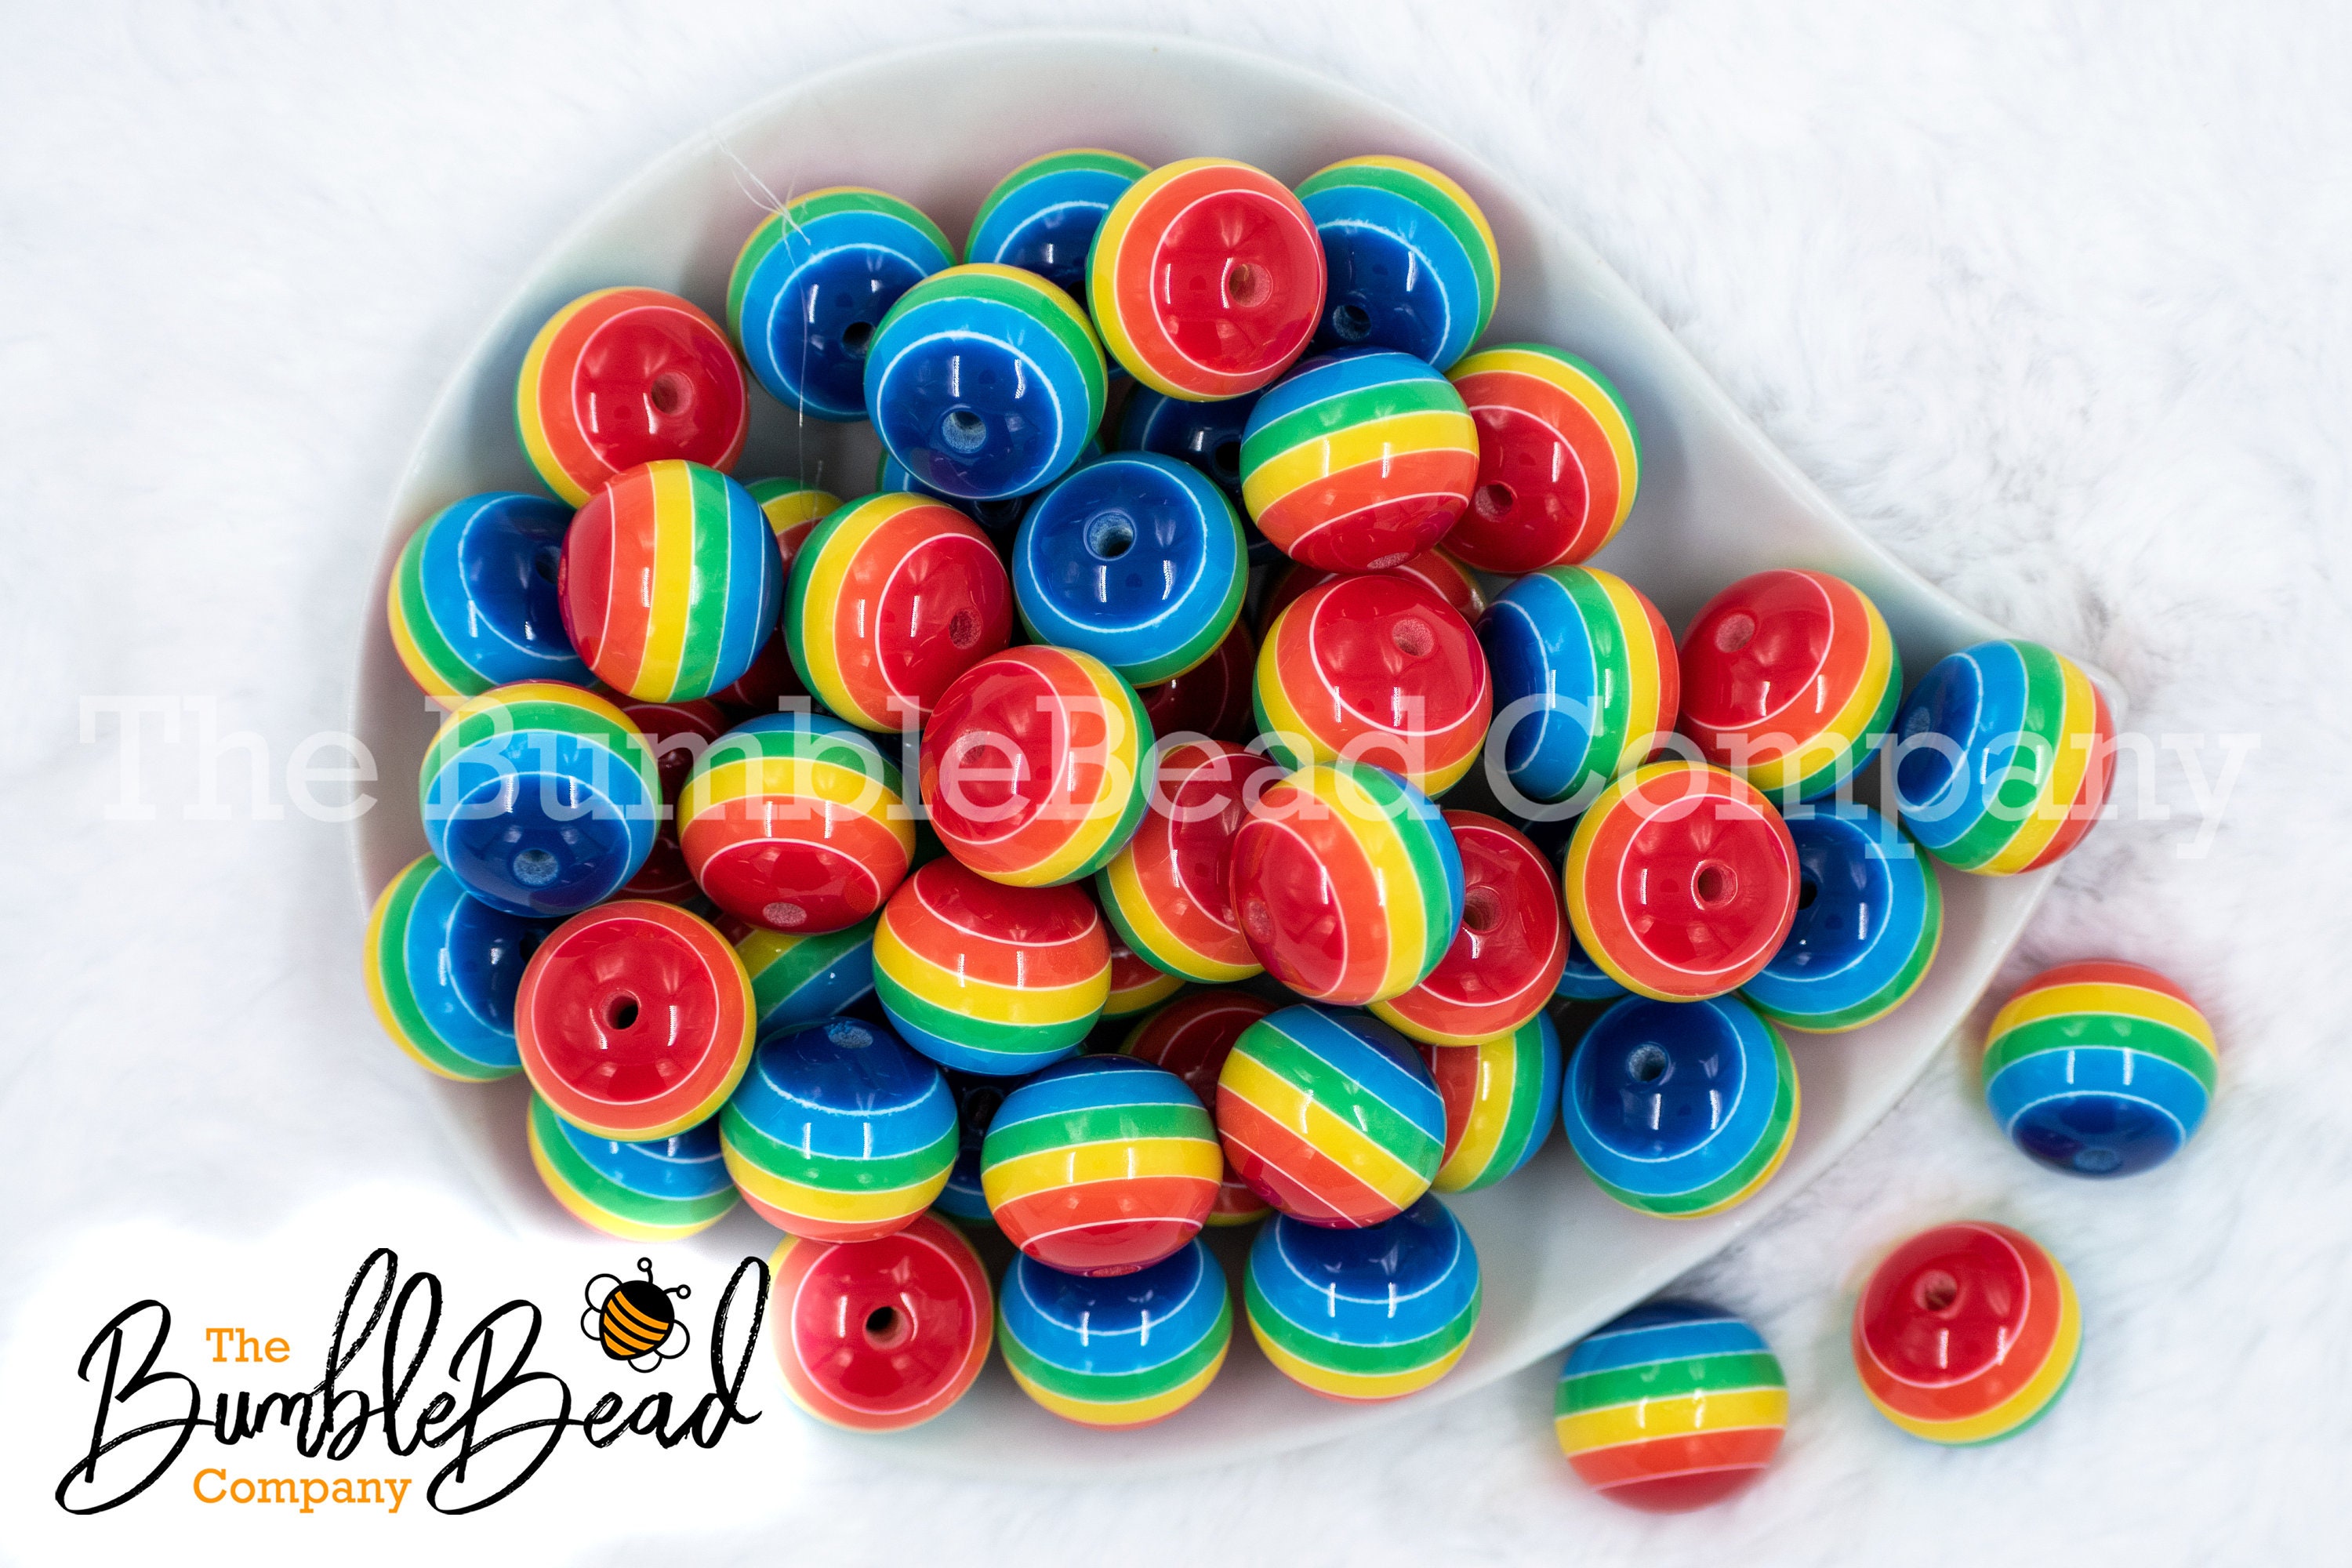 20mm Rainbow Ombre AB rhinestone bubblegum beads